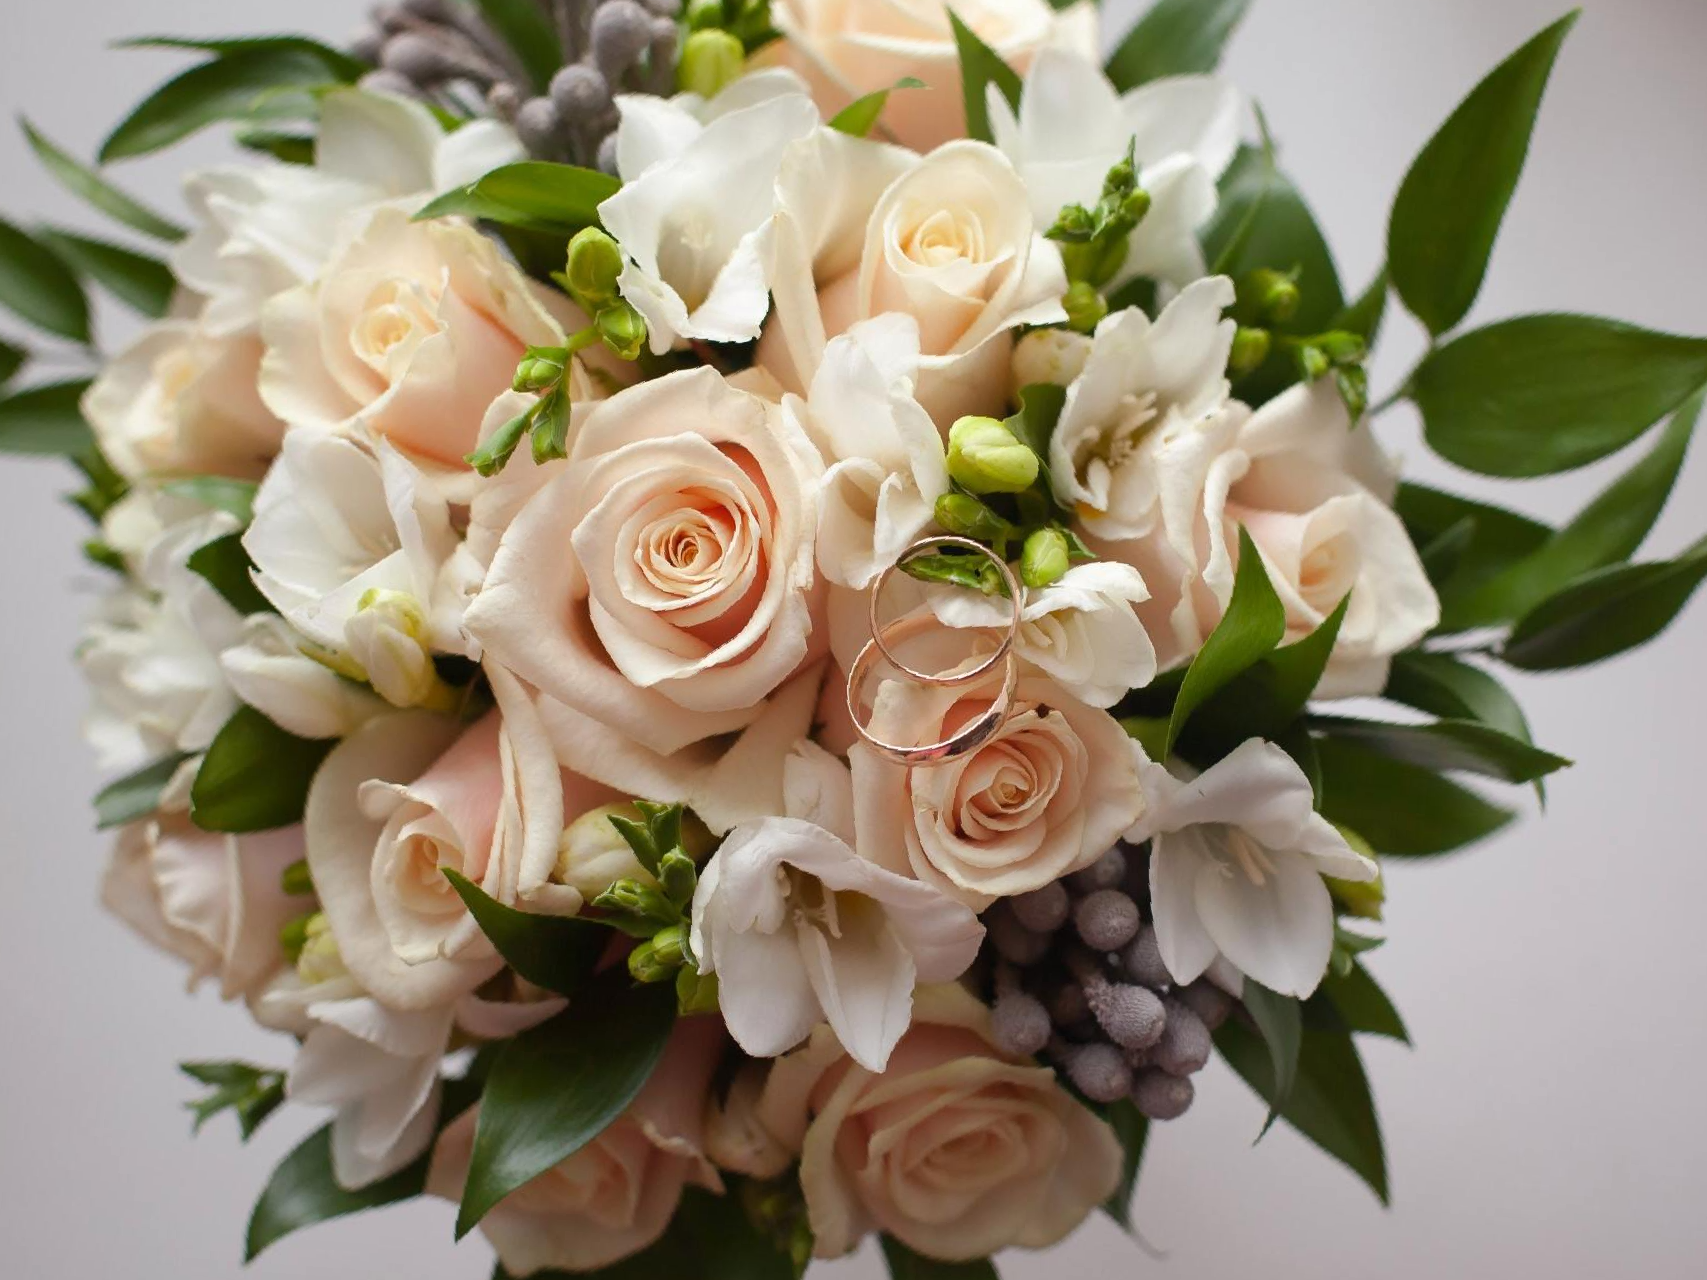 Floristry arrangements, Bridal Services, Weddings,